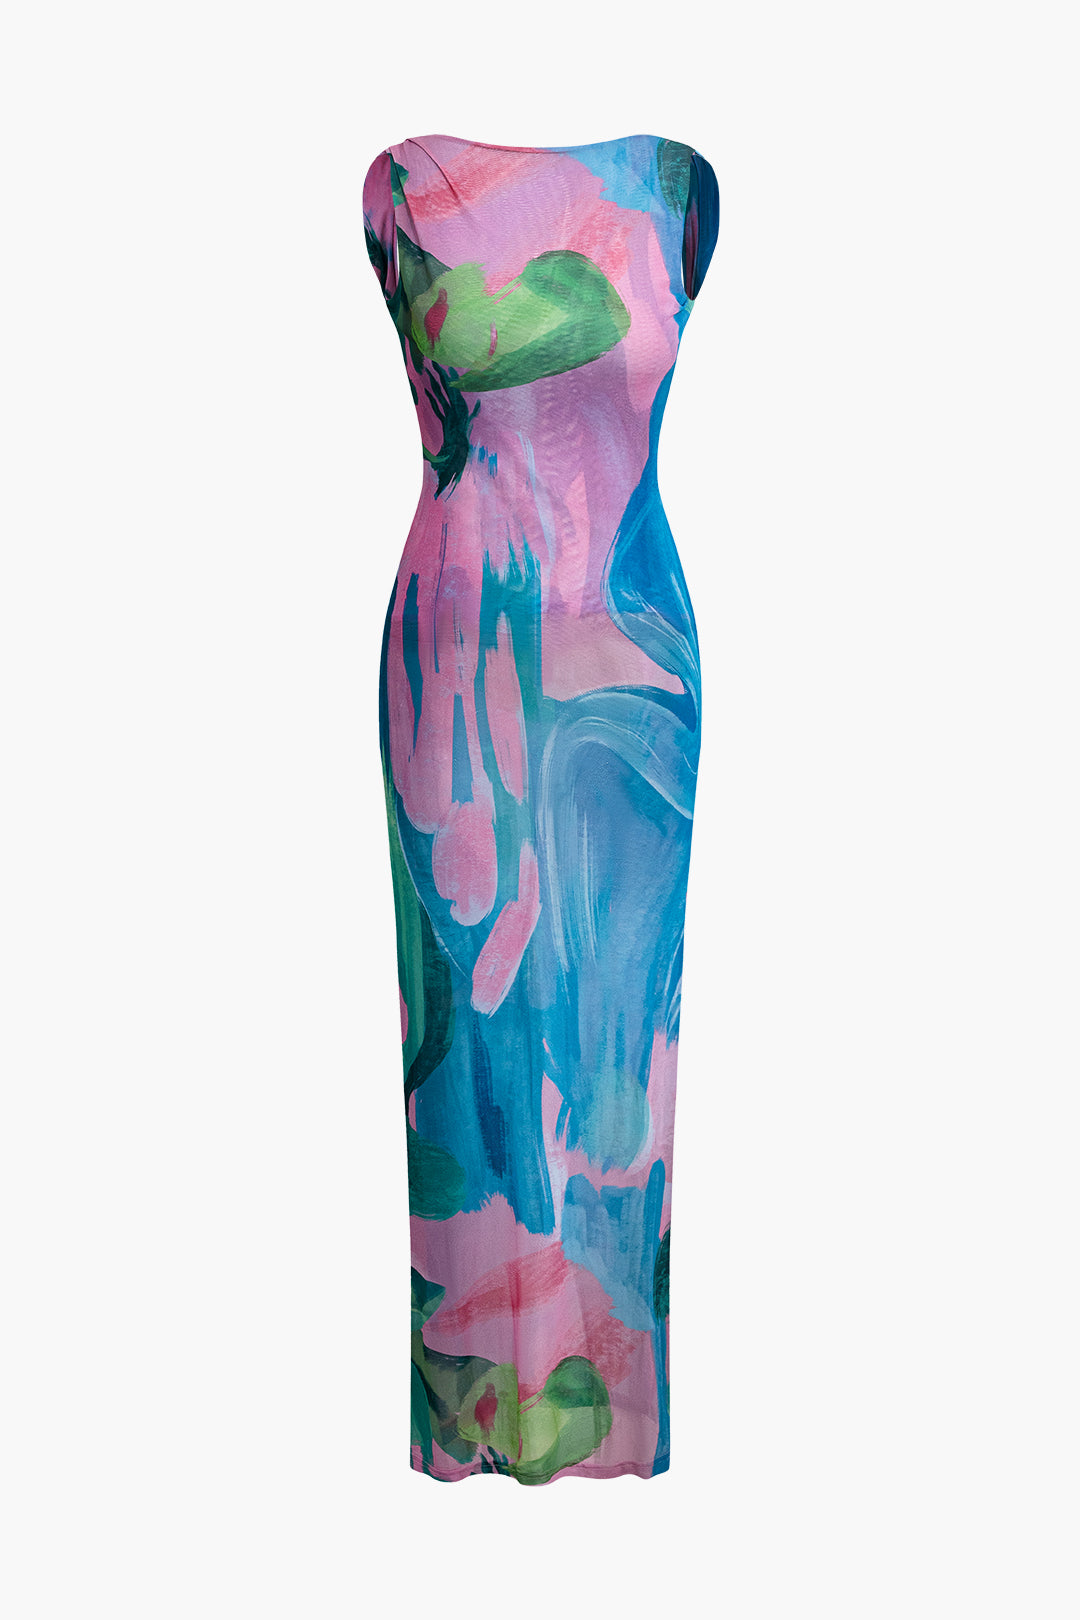 Abstract Floral Print Mesh Sleeveless Backless Maxi Dress